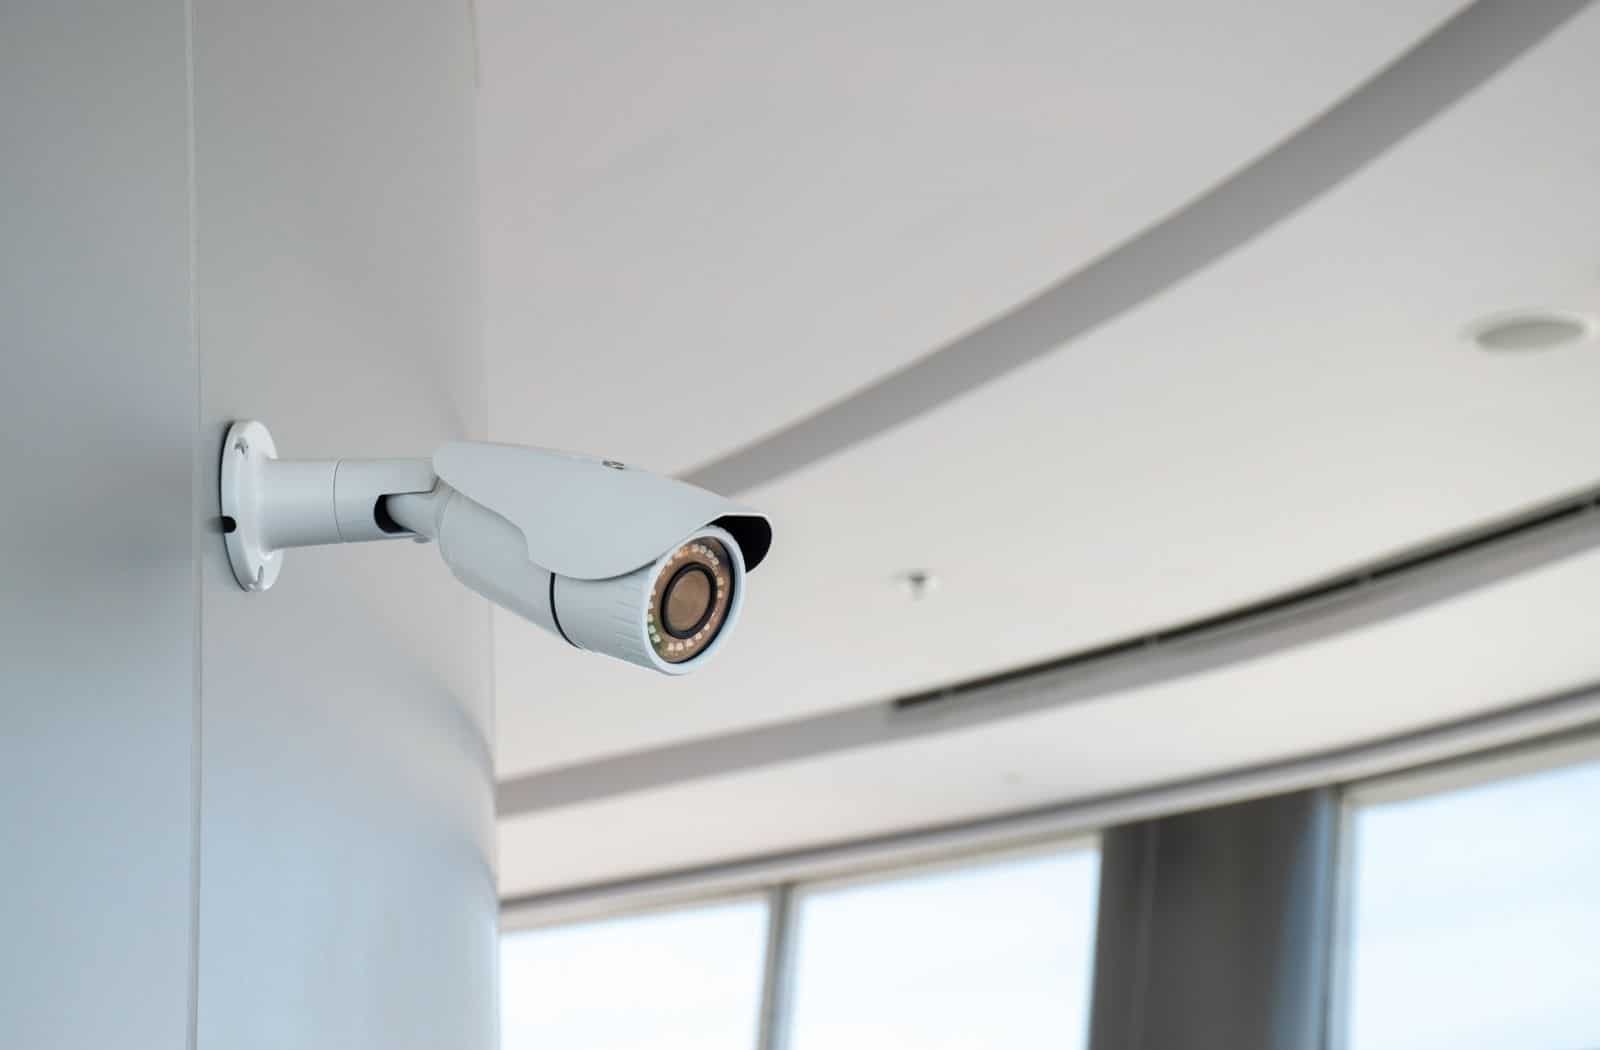 CCTV installation in Abu Dhabi